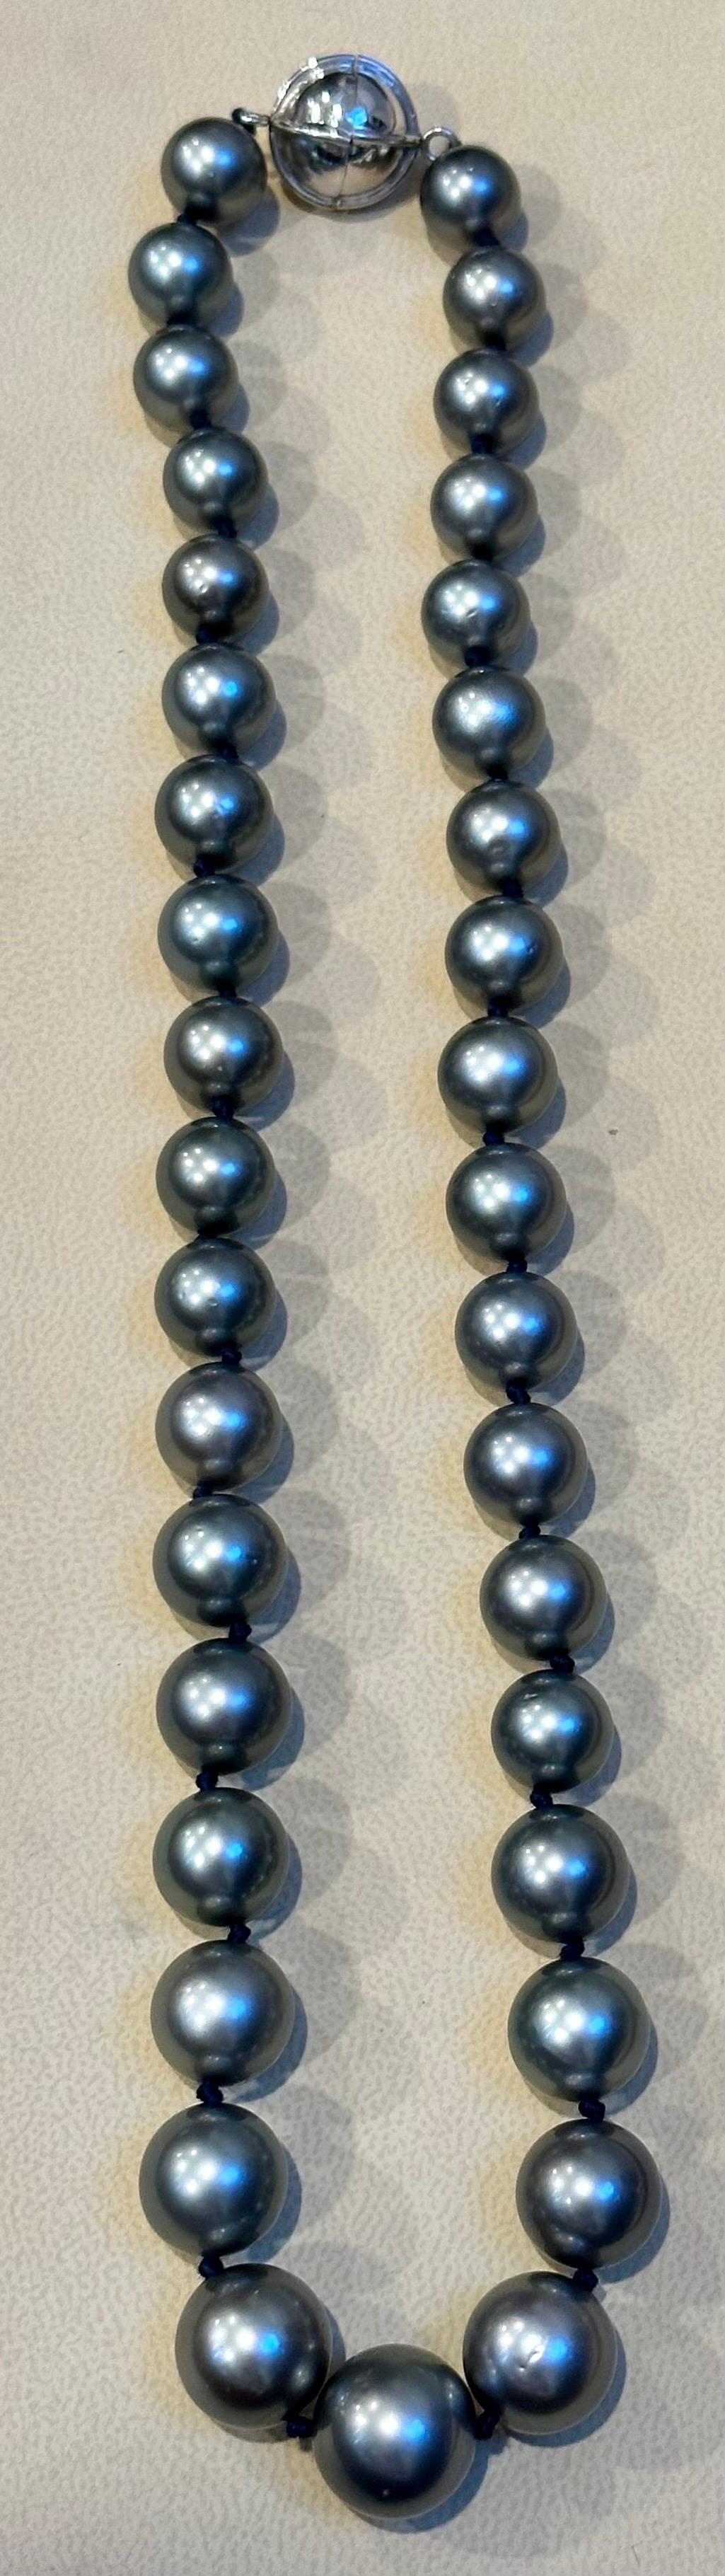 11-15 mm Tahitian Black Graduating Pearls Strand Necklace, Estate, WG 4